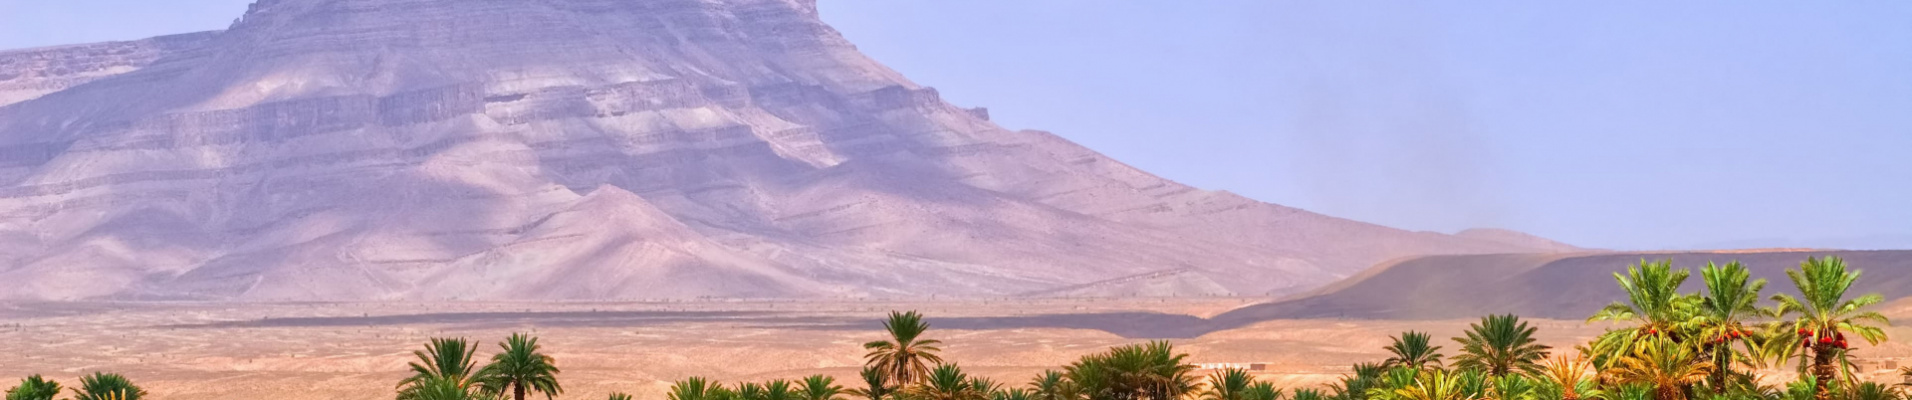 draa-valley-morocco